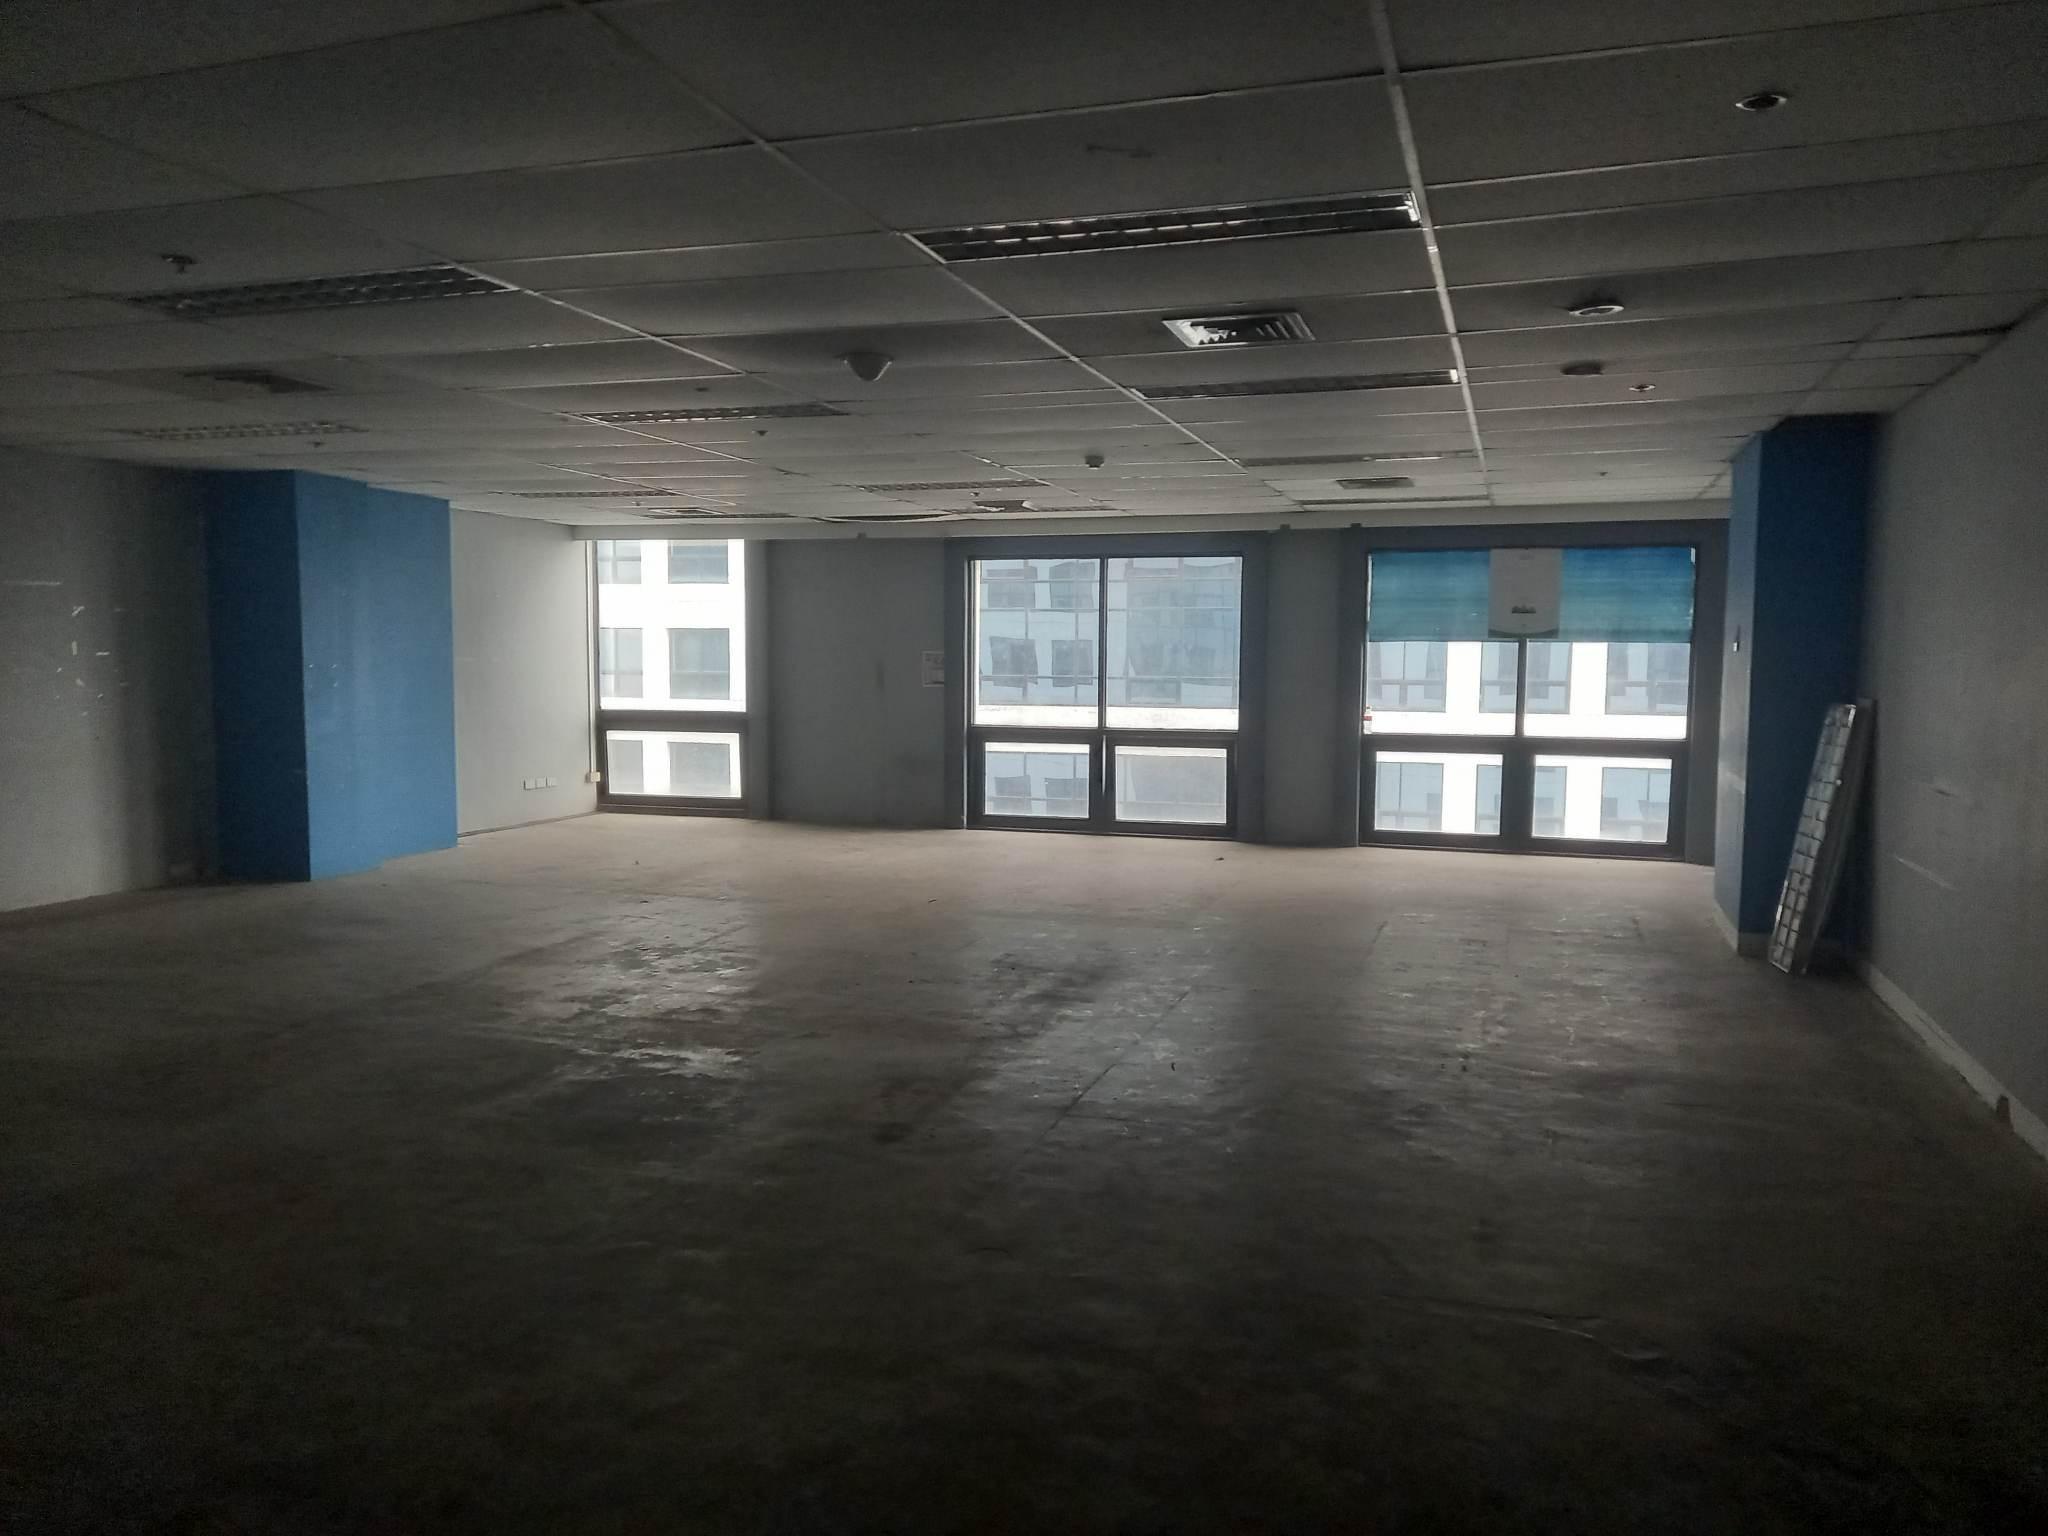 Office Space Rent Lease 111 sqm Ortigas Center Pasig Manila